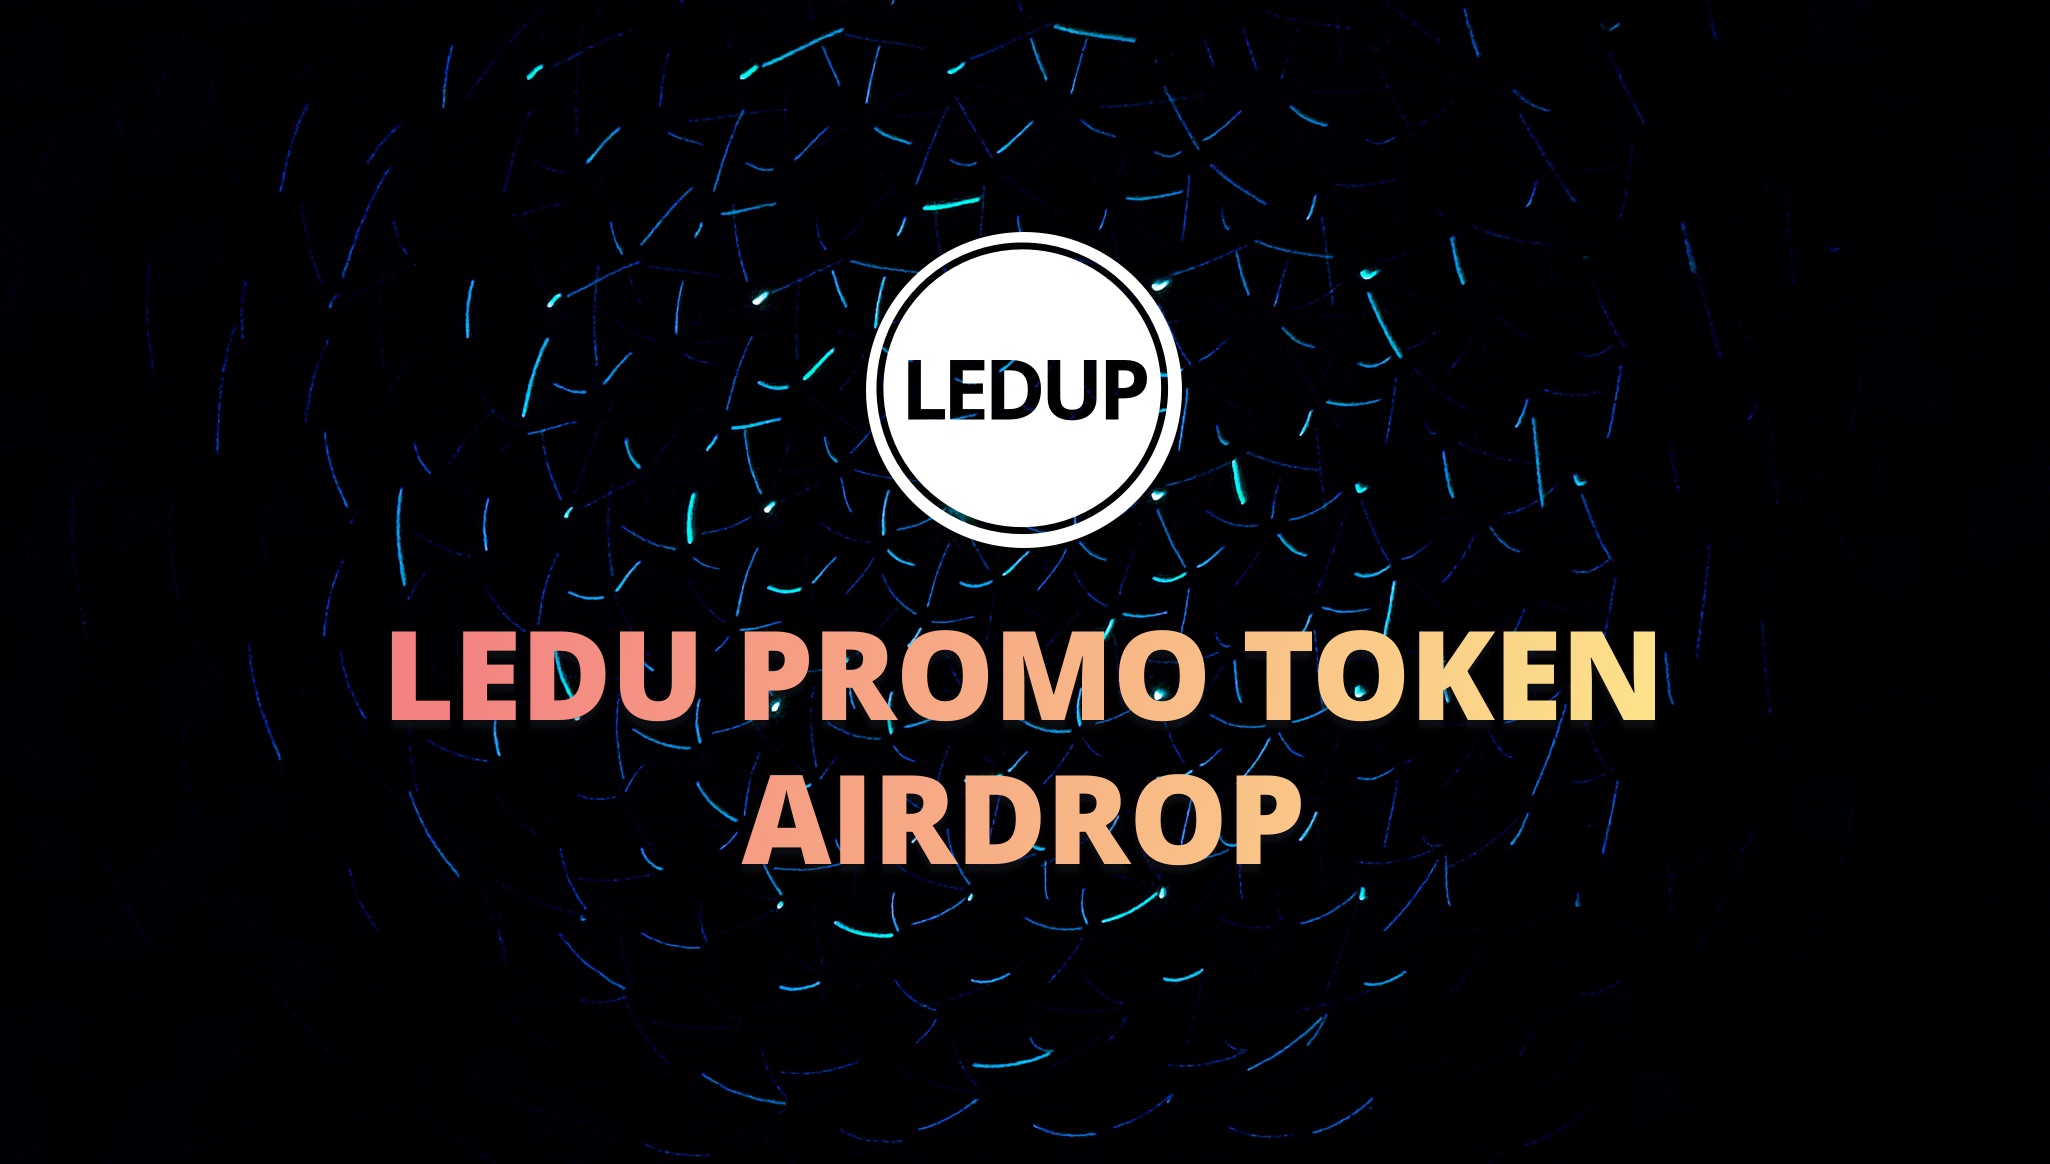 Education Ecosystem to Airdrop LEDU Promo Token